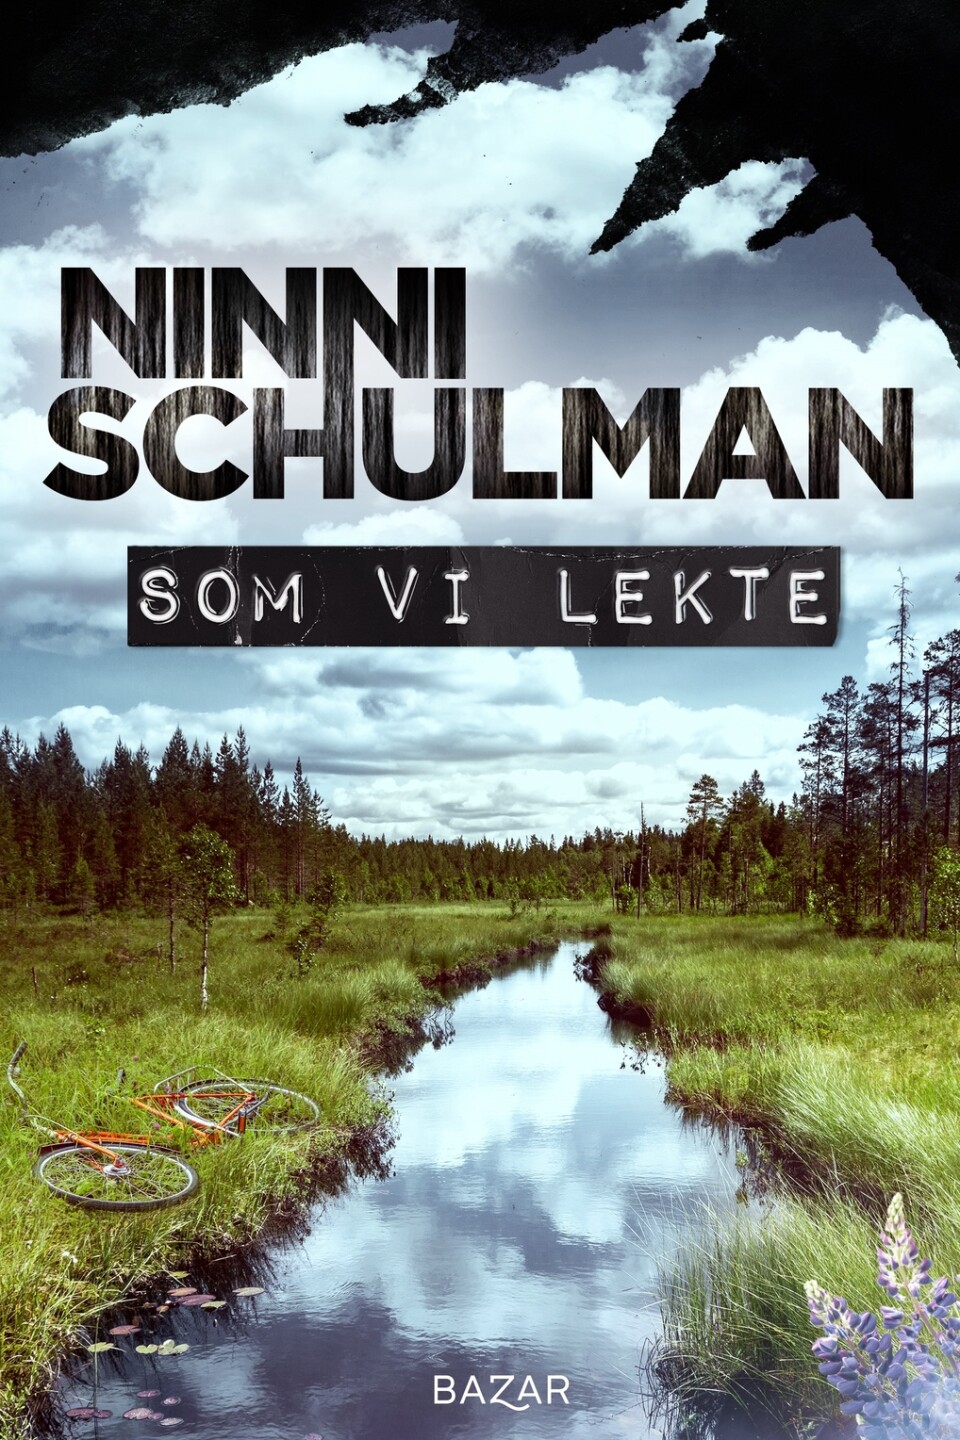 Ninni Schulman - ”Som vi lekte”